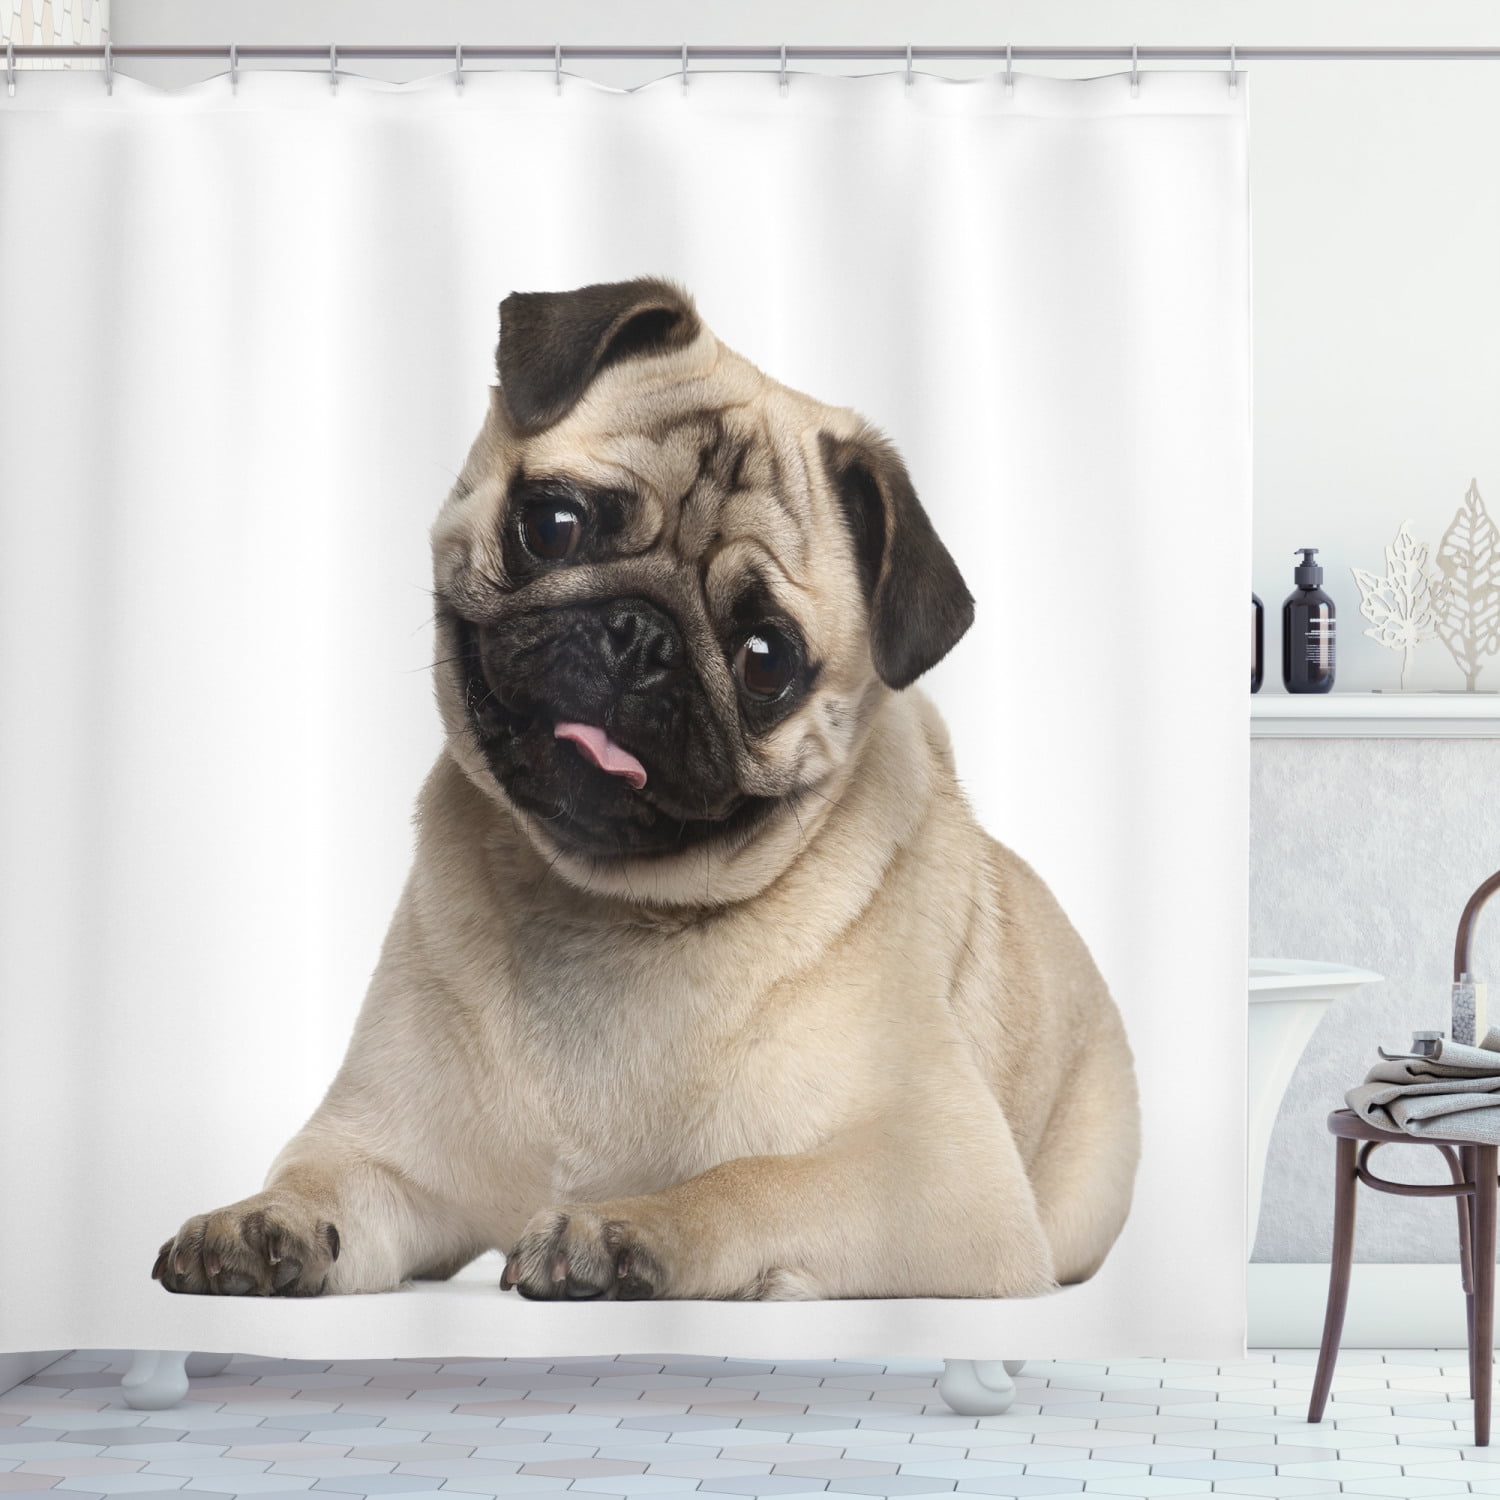 Pug Puppy Shower Curtain Fabric Bathroom Decor Set with Hooks 4 Sizes 